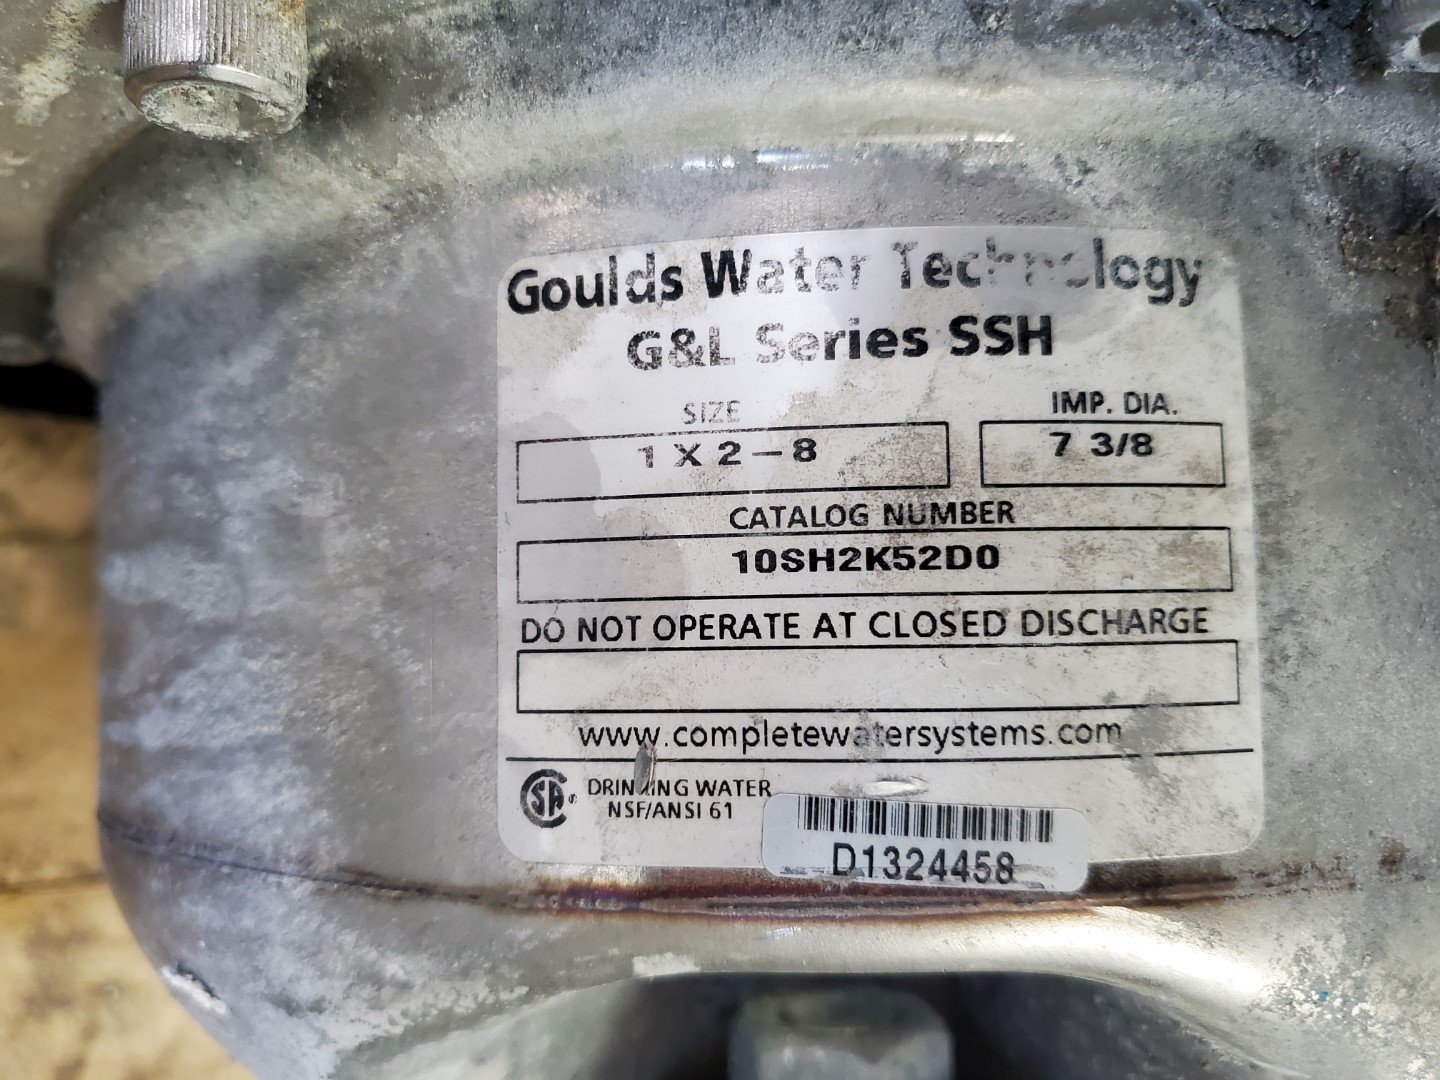 1" x 2" Goulds Centrifugal Pump, S/S, 7.5 HP